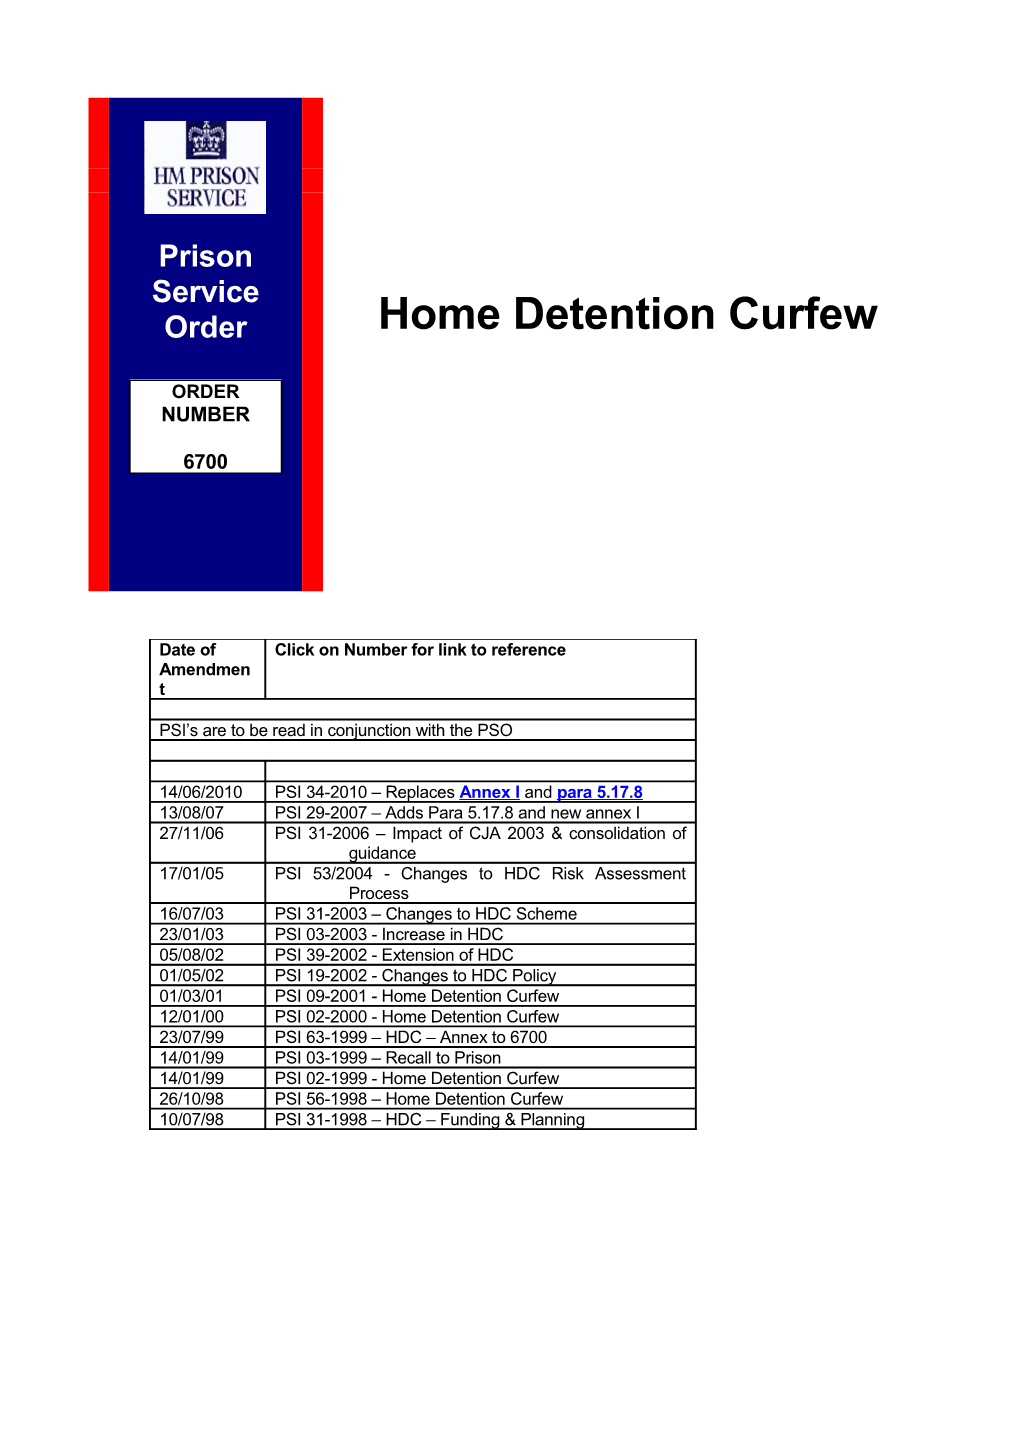 PSO 6700 - Home Detention Curfew